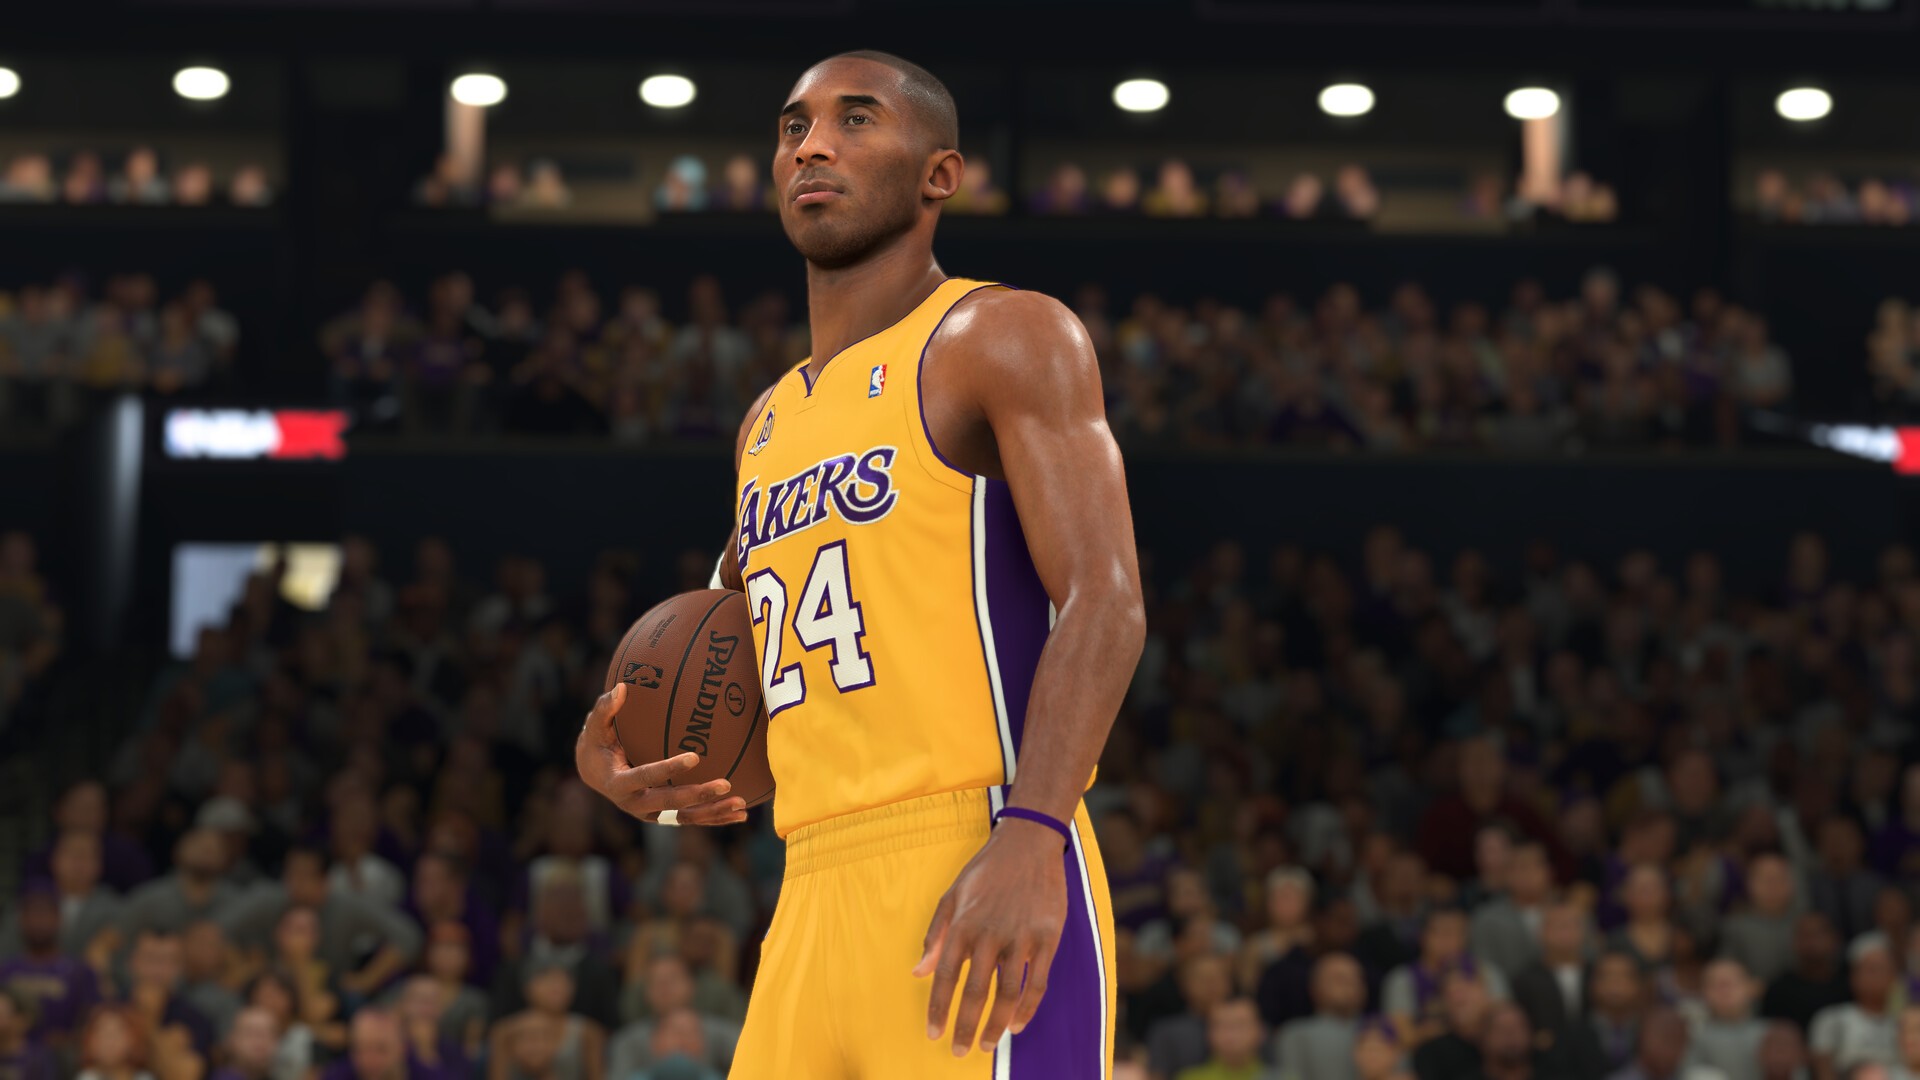 Kobe Bryant Basketball Sport NBA Live Wallpaper APK voor Android Download